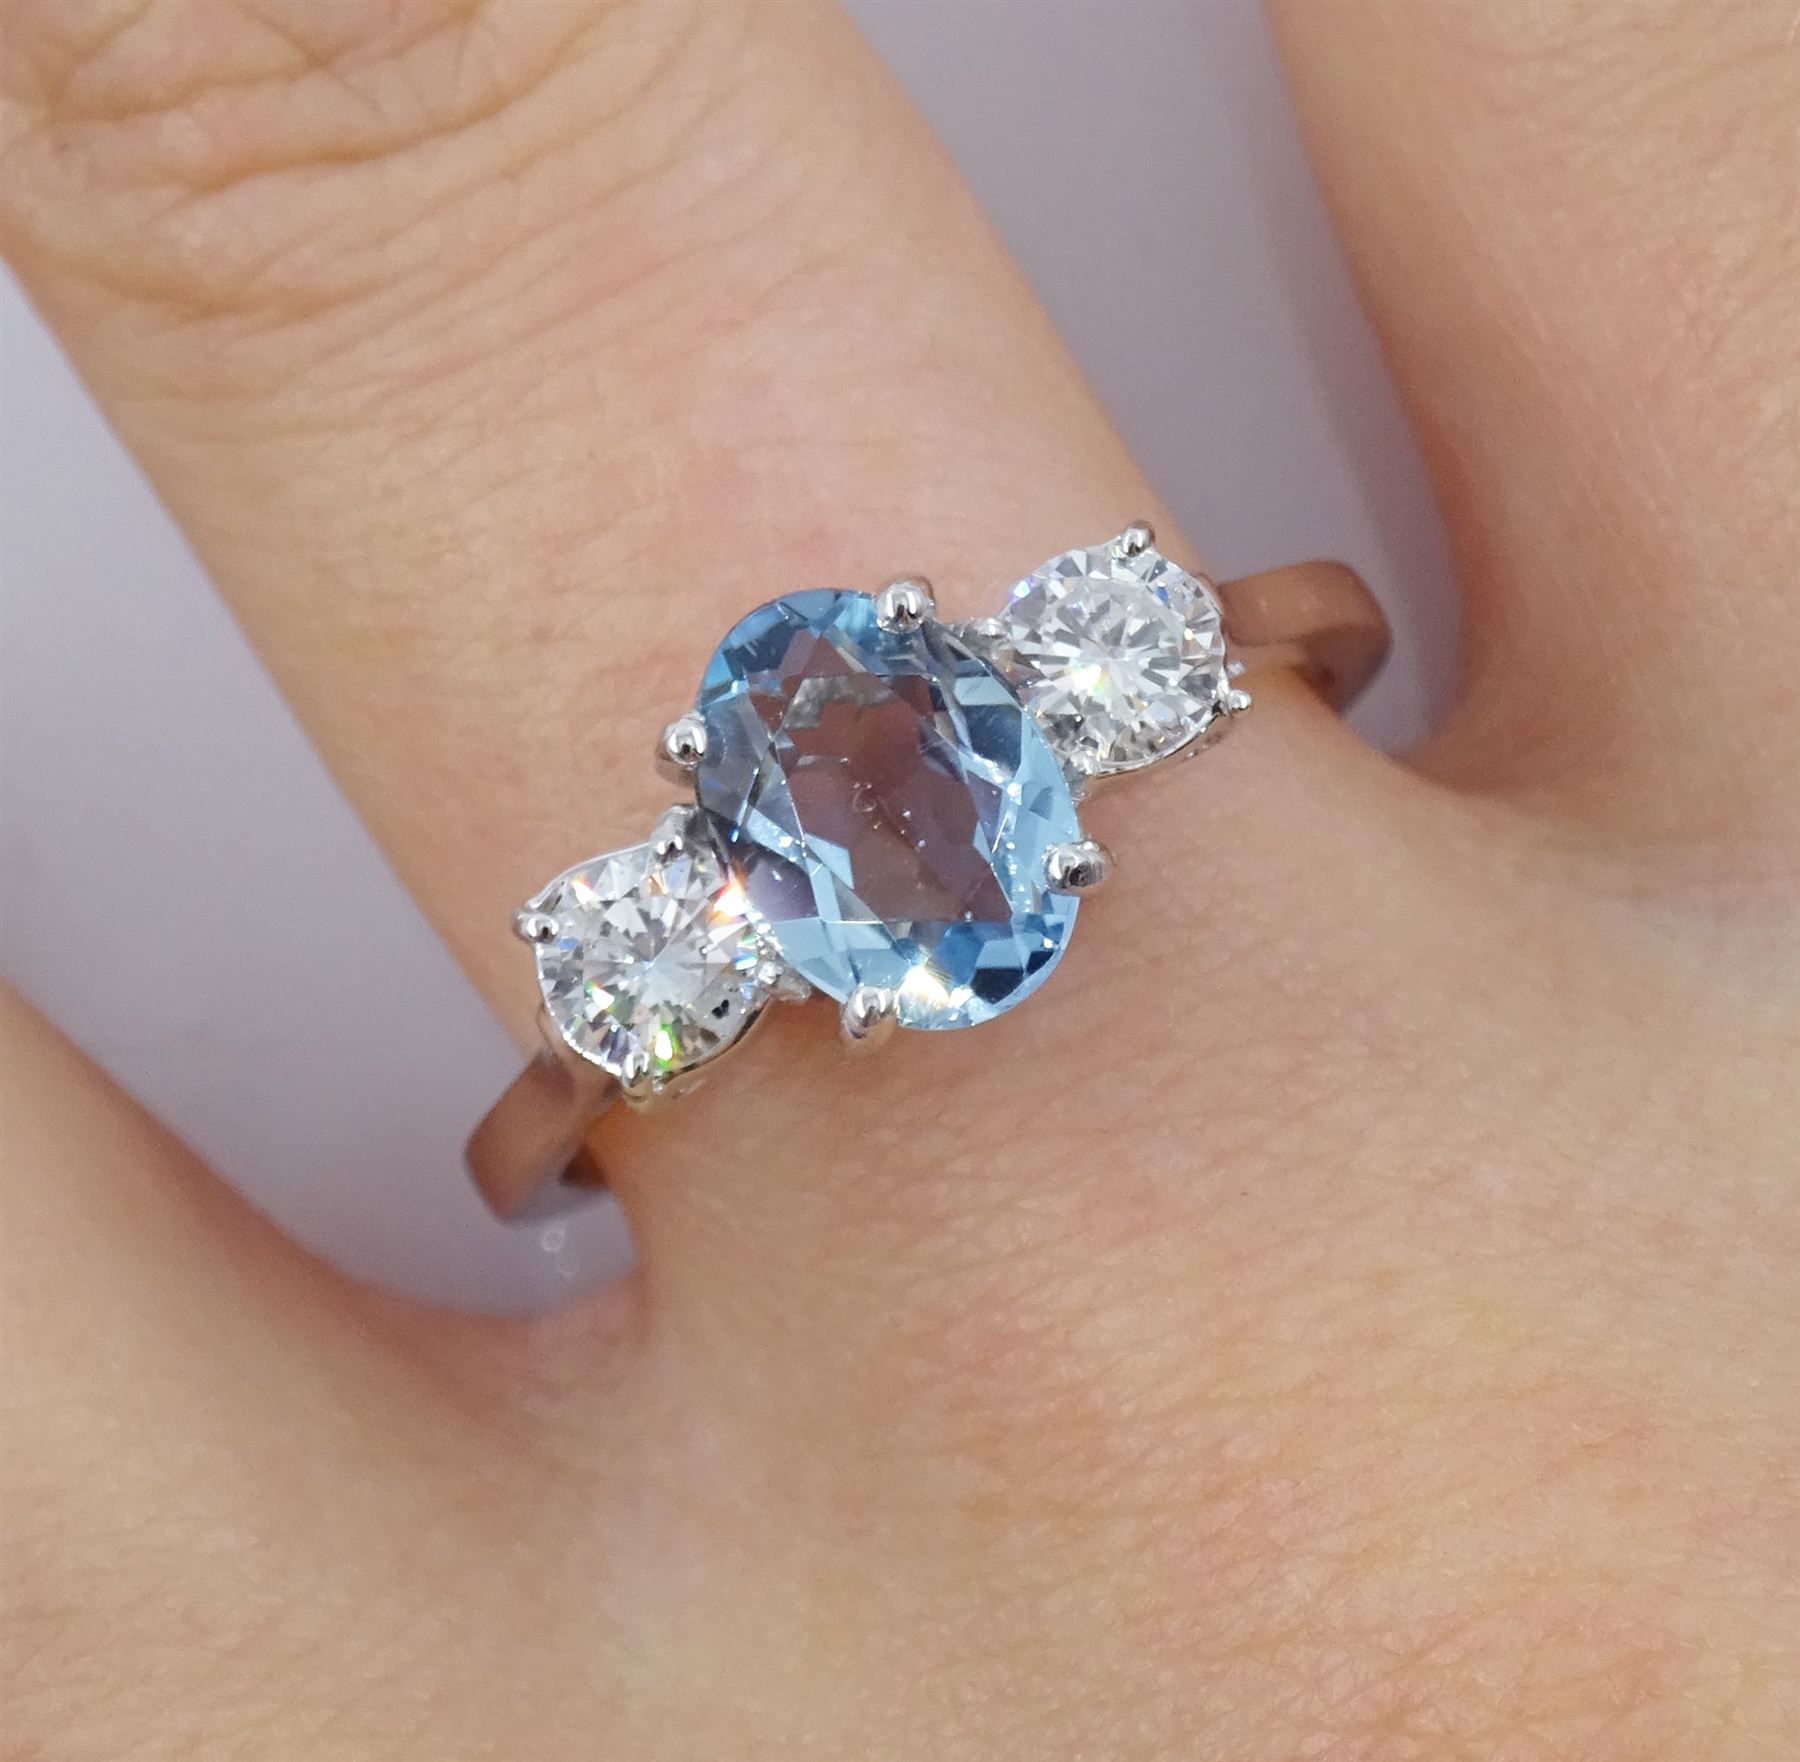 18ct white gold three stone oval aquamarine and round brilliant cut diamond ring - Image 2 of 4